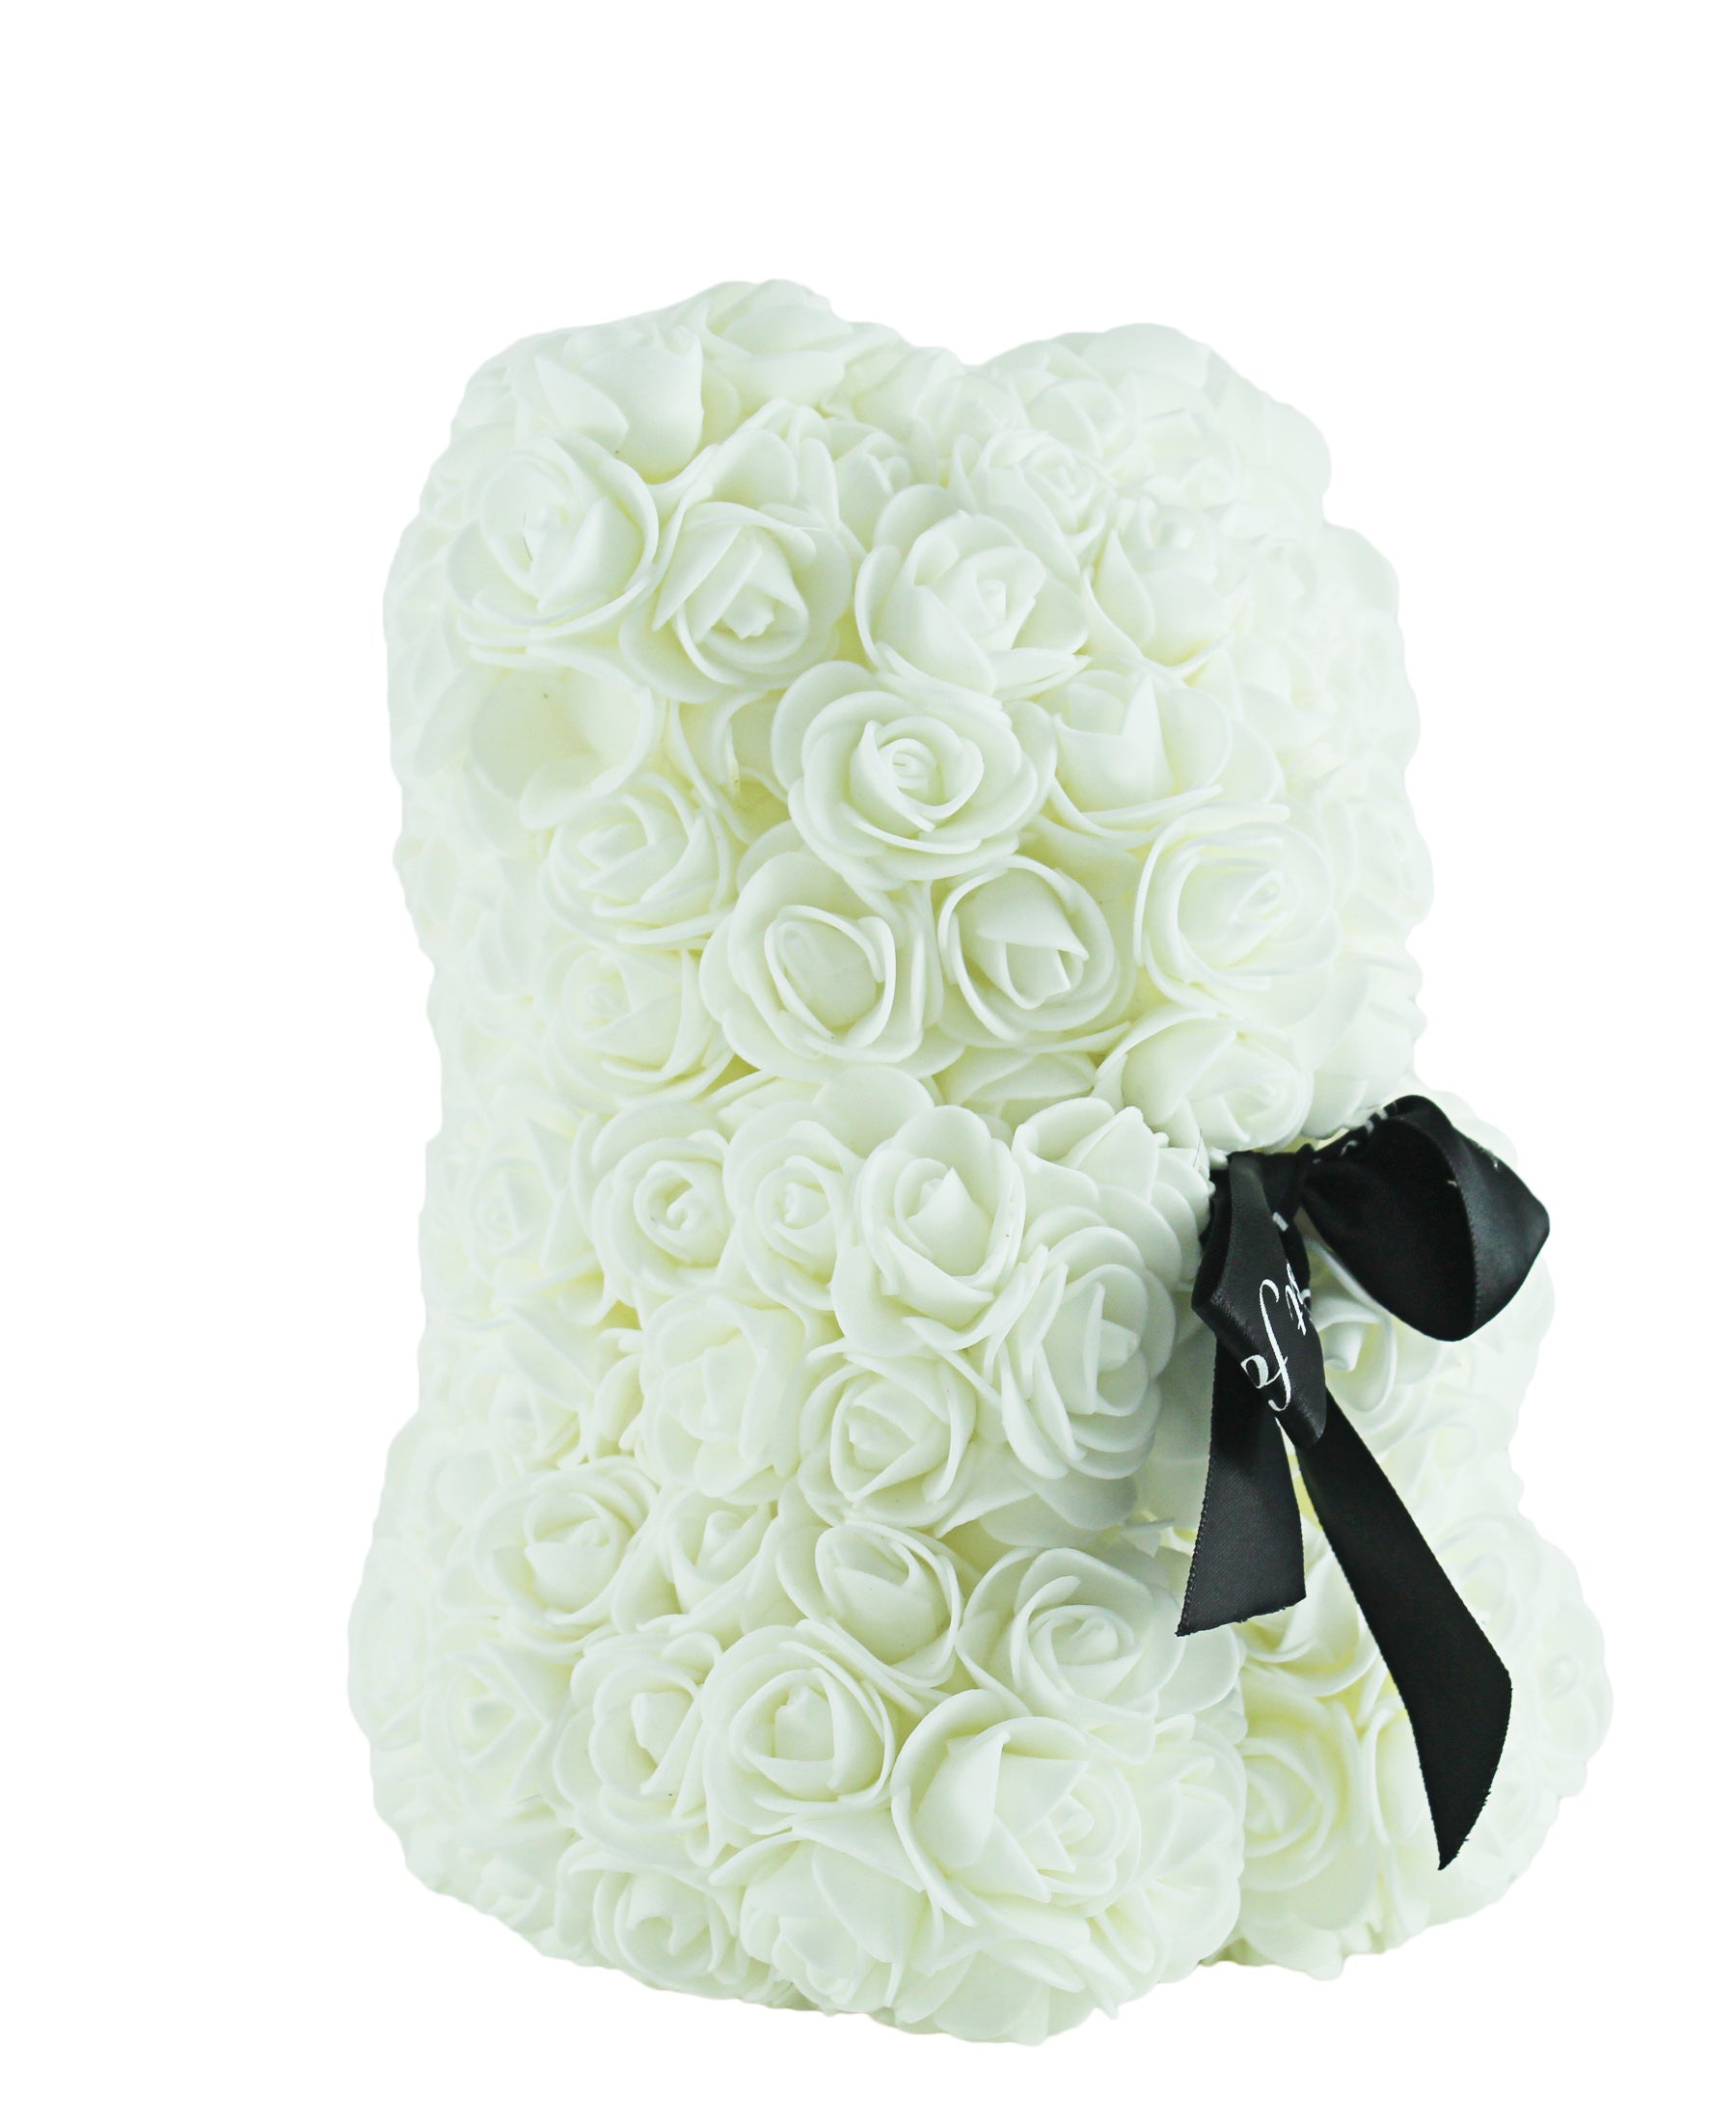 Lovers Design Floral Teddy Bear - White